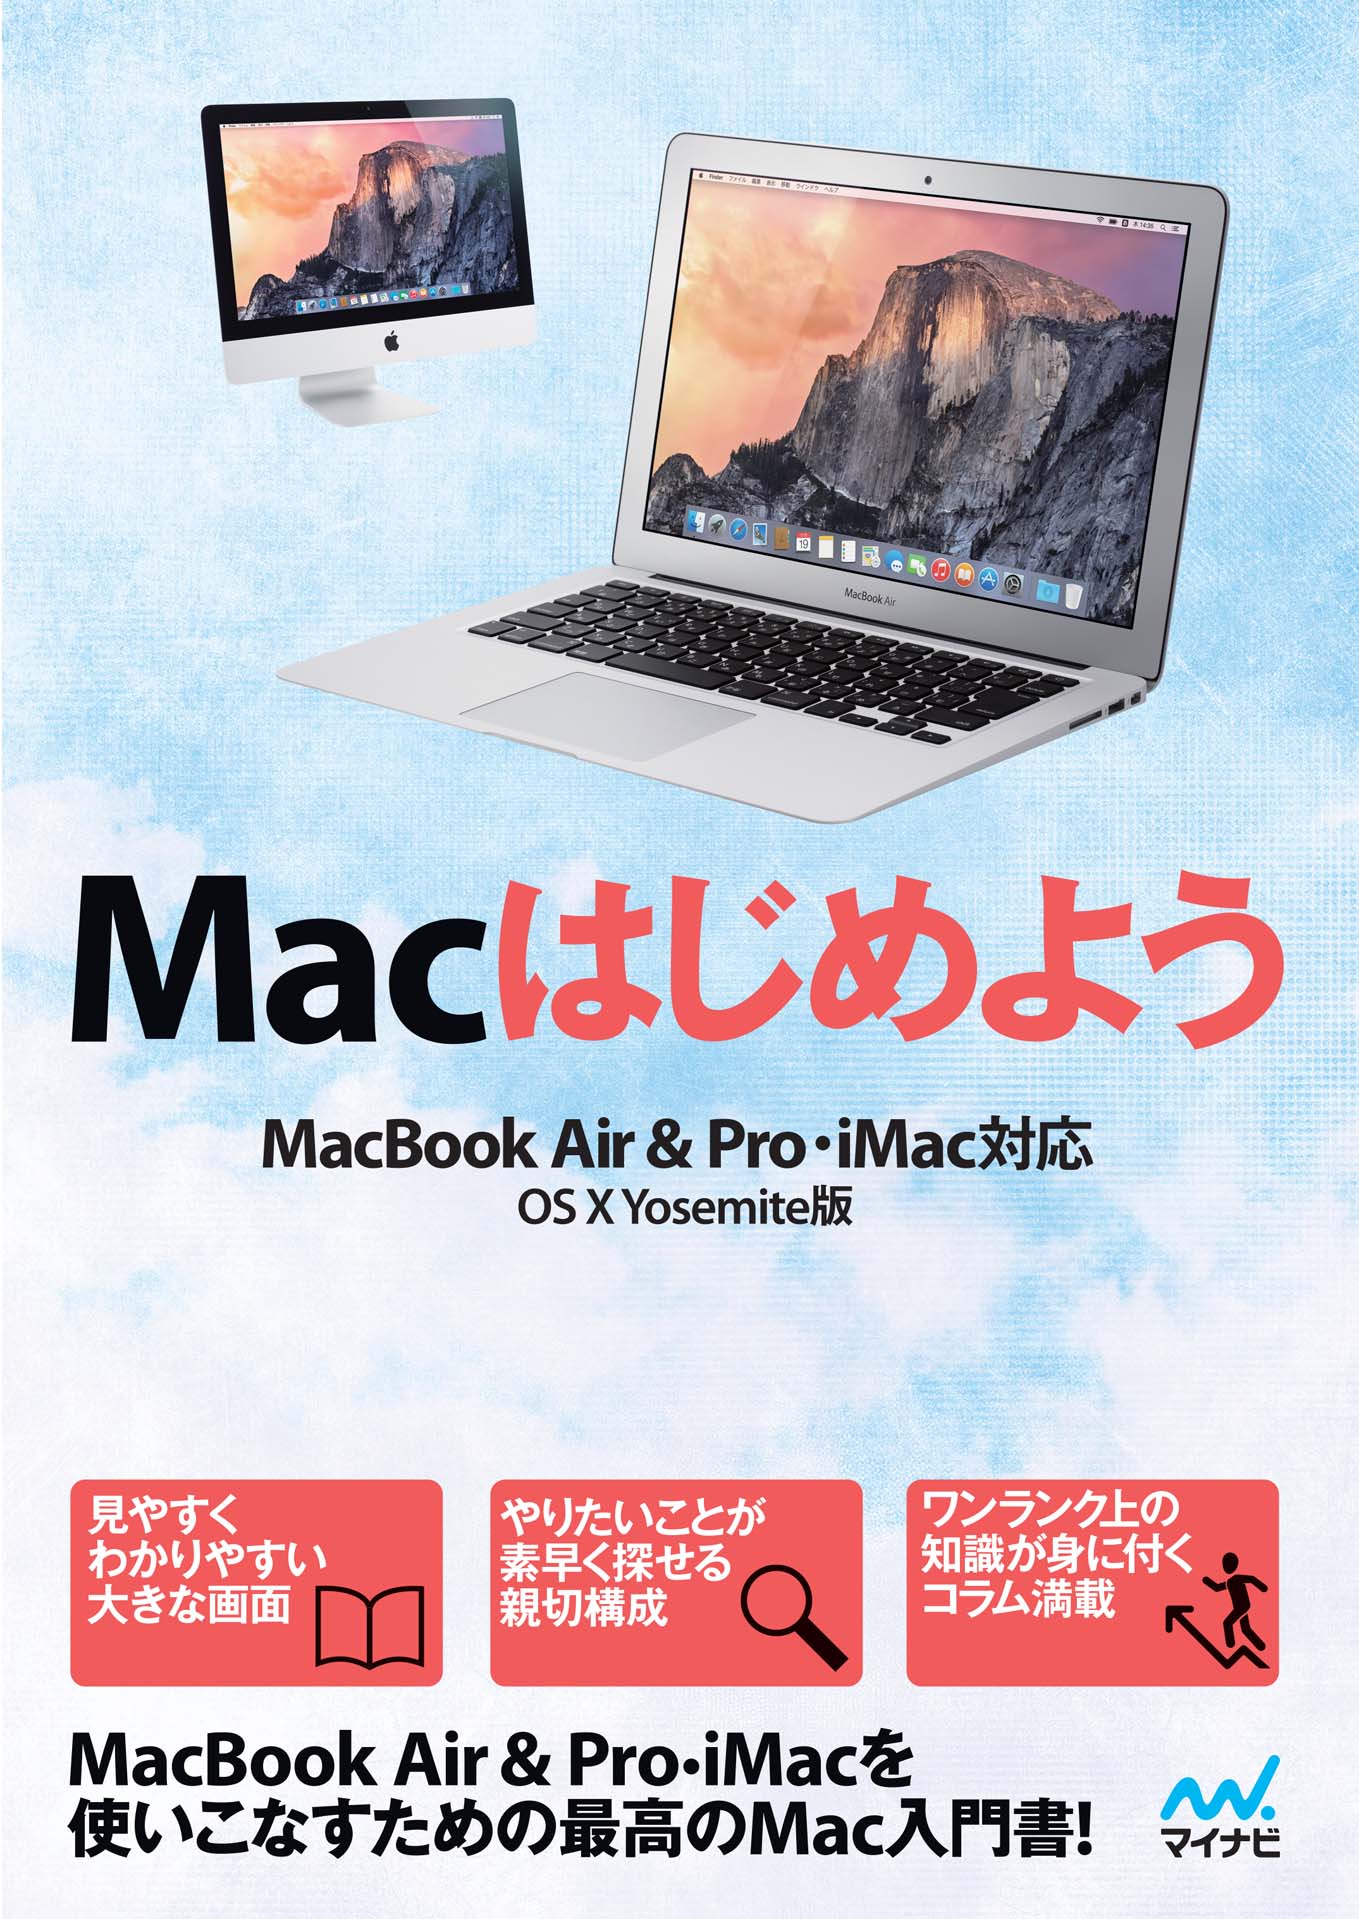 MacBook Pro OS X Yosemite